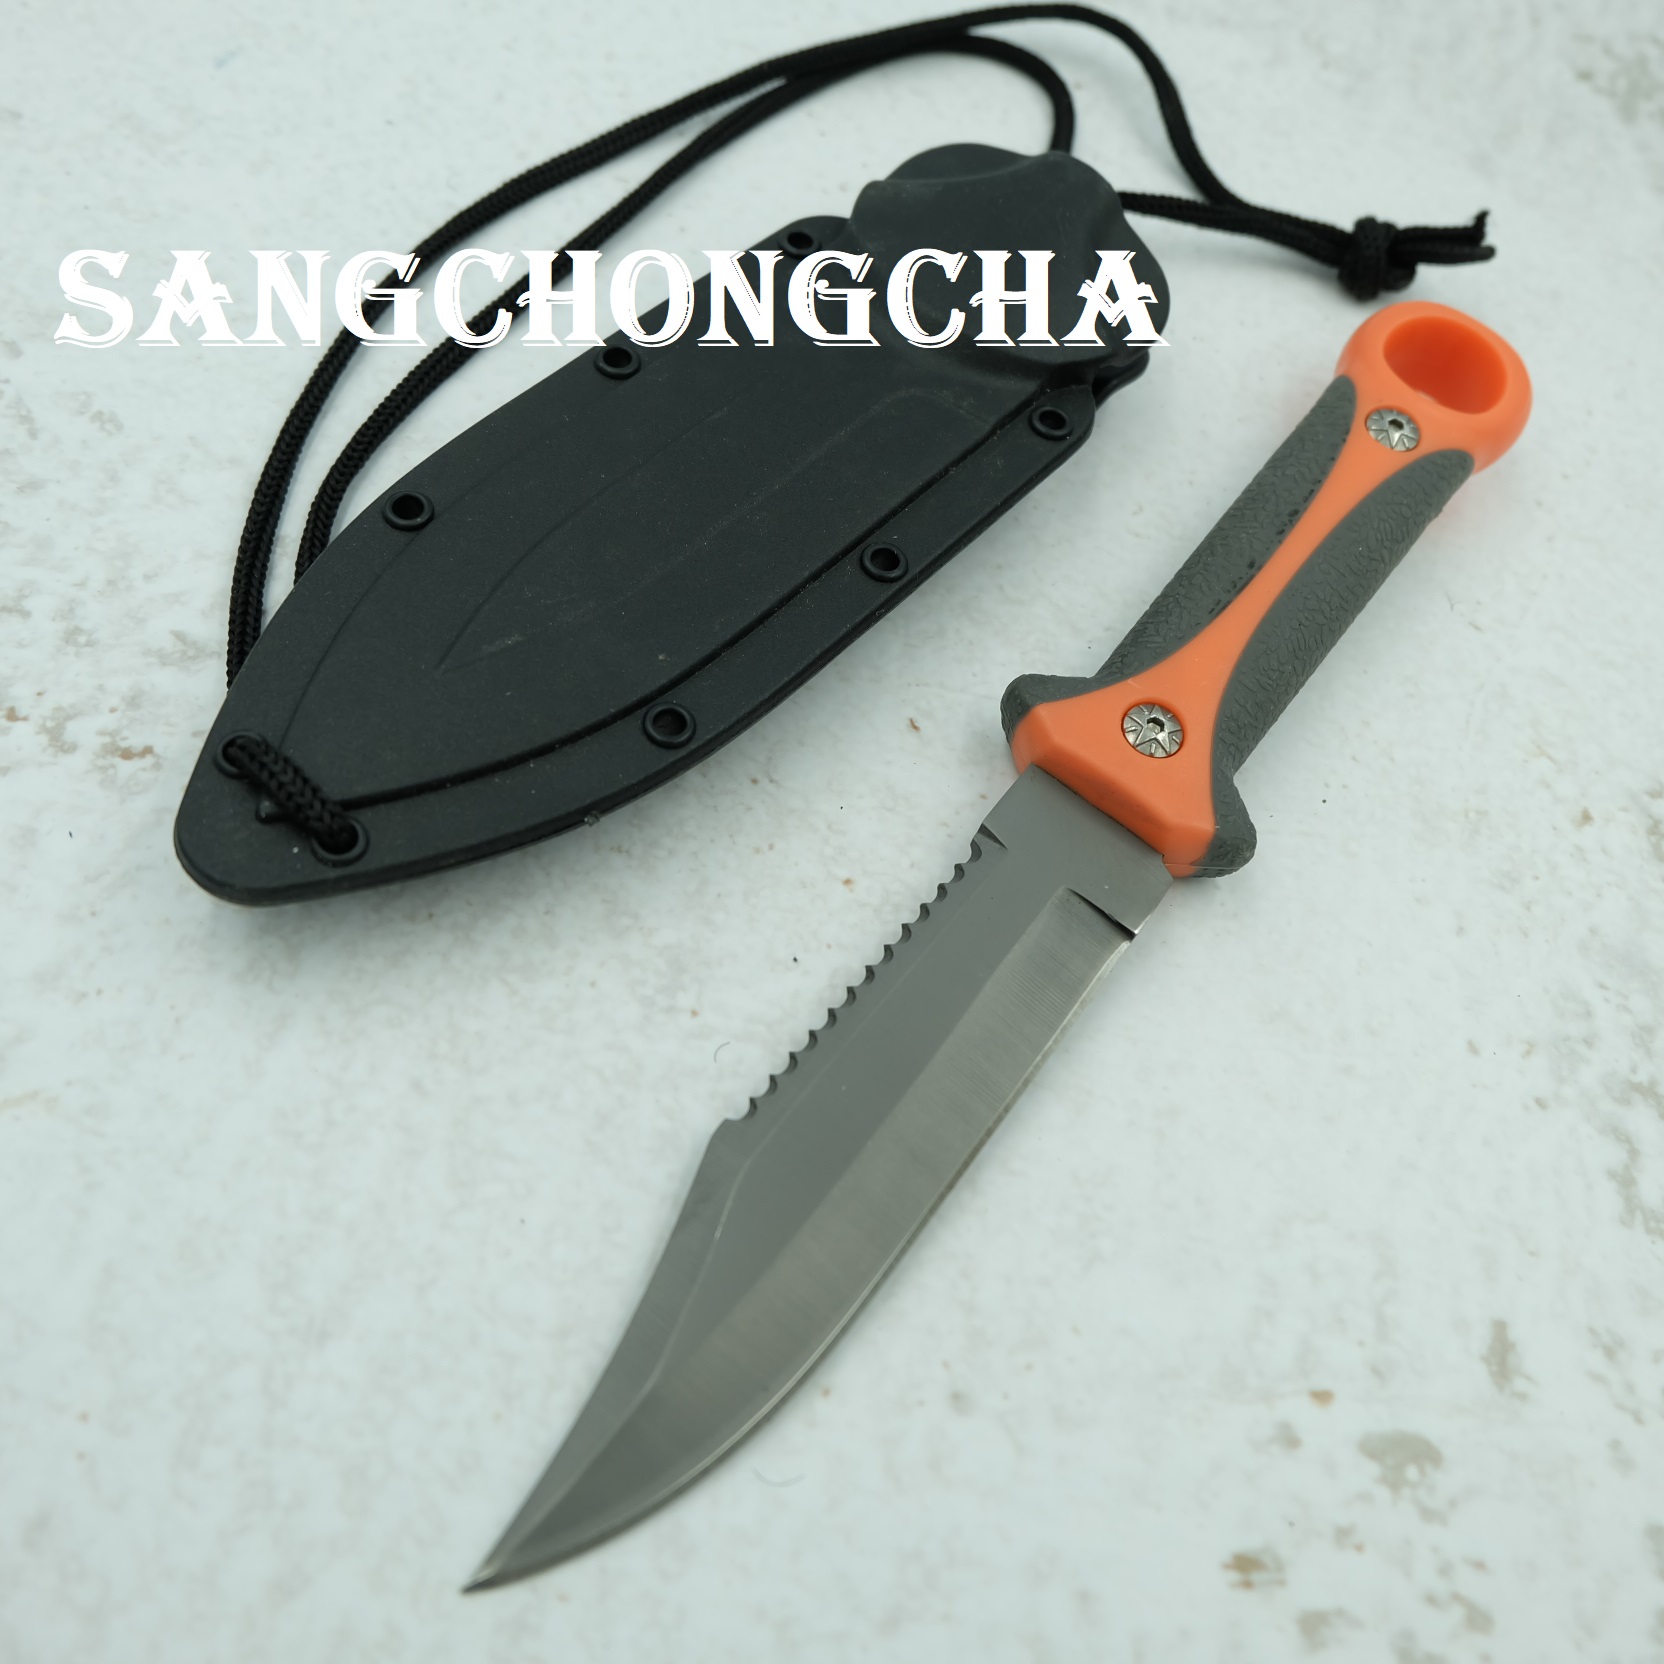 Sangchongcha มีดพกเดินป่า มีดดาบ มีดพกพา มีดเดินป่า มีดแคมป์ปิ้ง มีดใบตาย มีดดำน้ำ Paratroopers ยาว22.00ซม. มาพร้อมปลอกพลาสติกแข็งทนทาน FX004-NORMAL and CURVE... Fixed blade knife